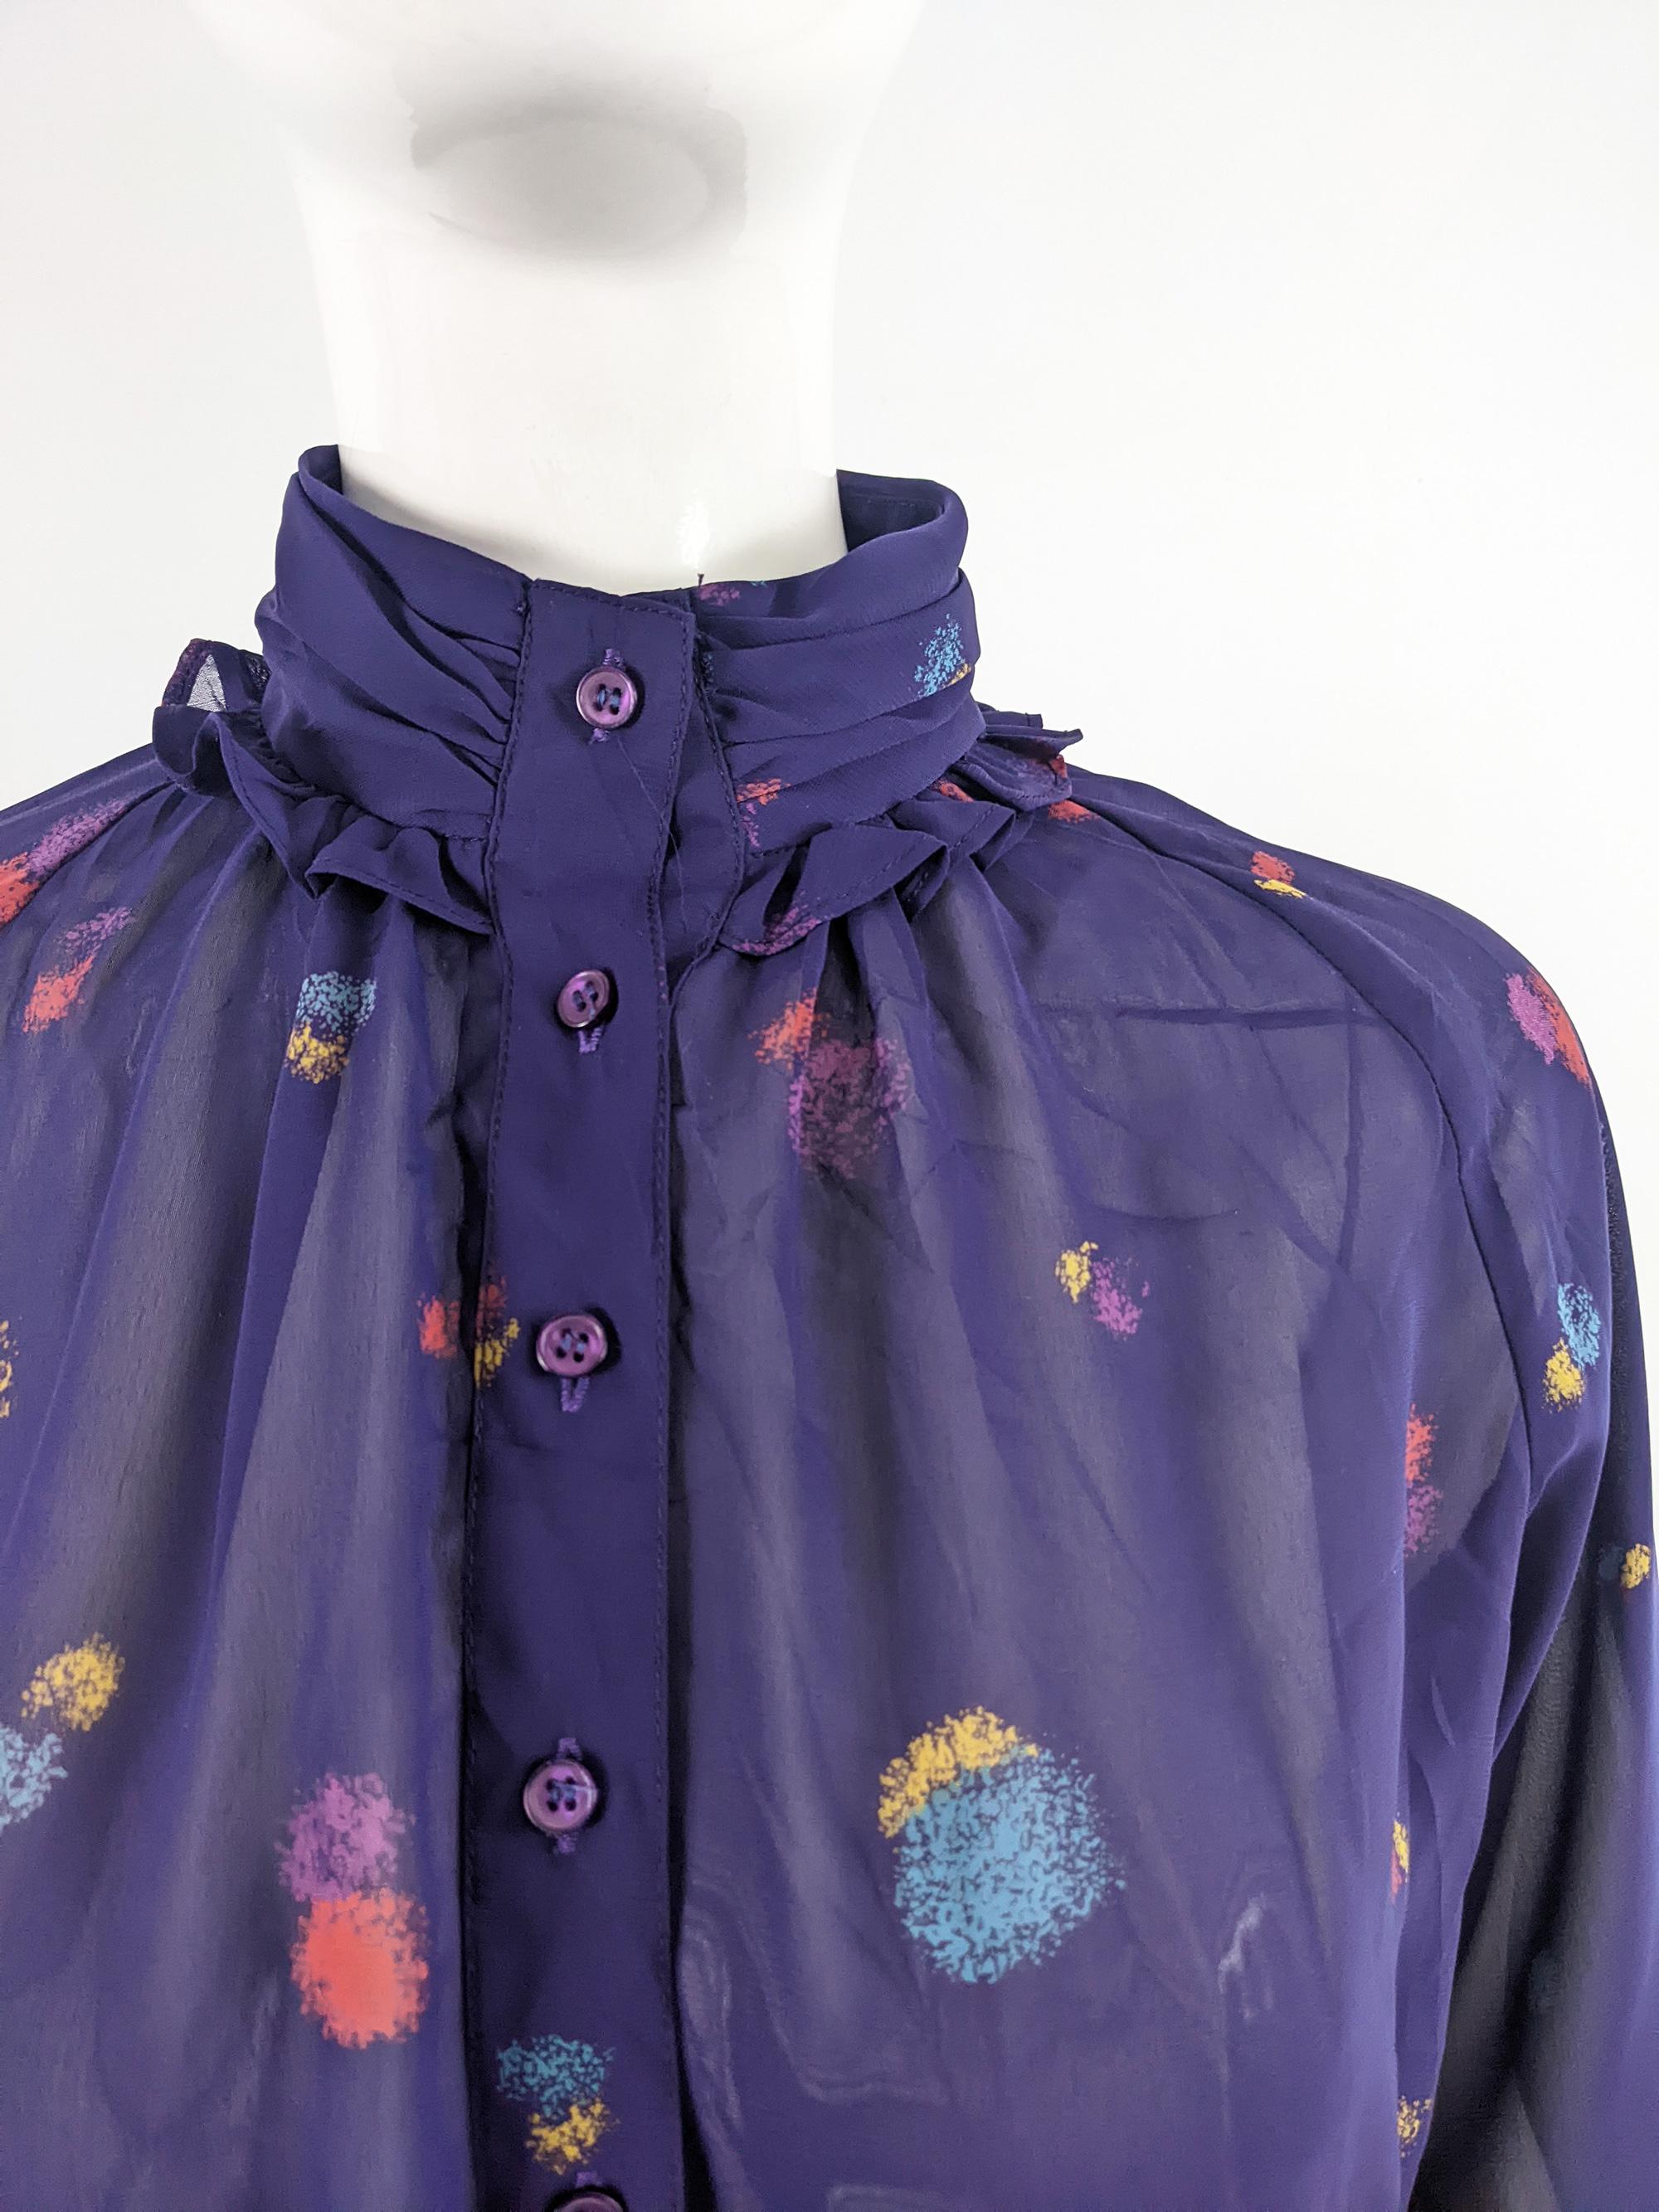 Aroche Paris Vintage 1970s Sheer Purple Ruffle Collar High Neck Shirt Dress For Sale 2